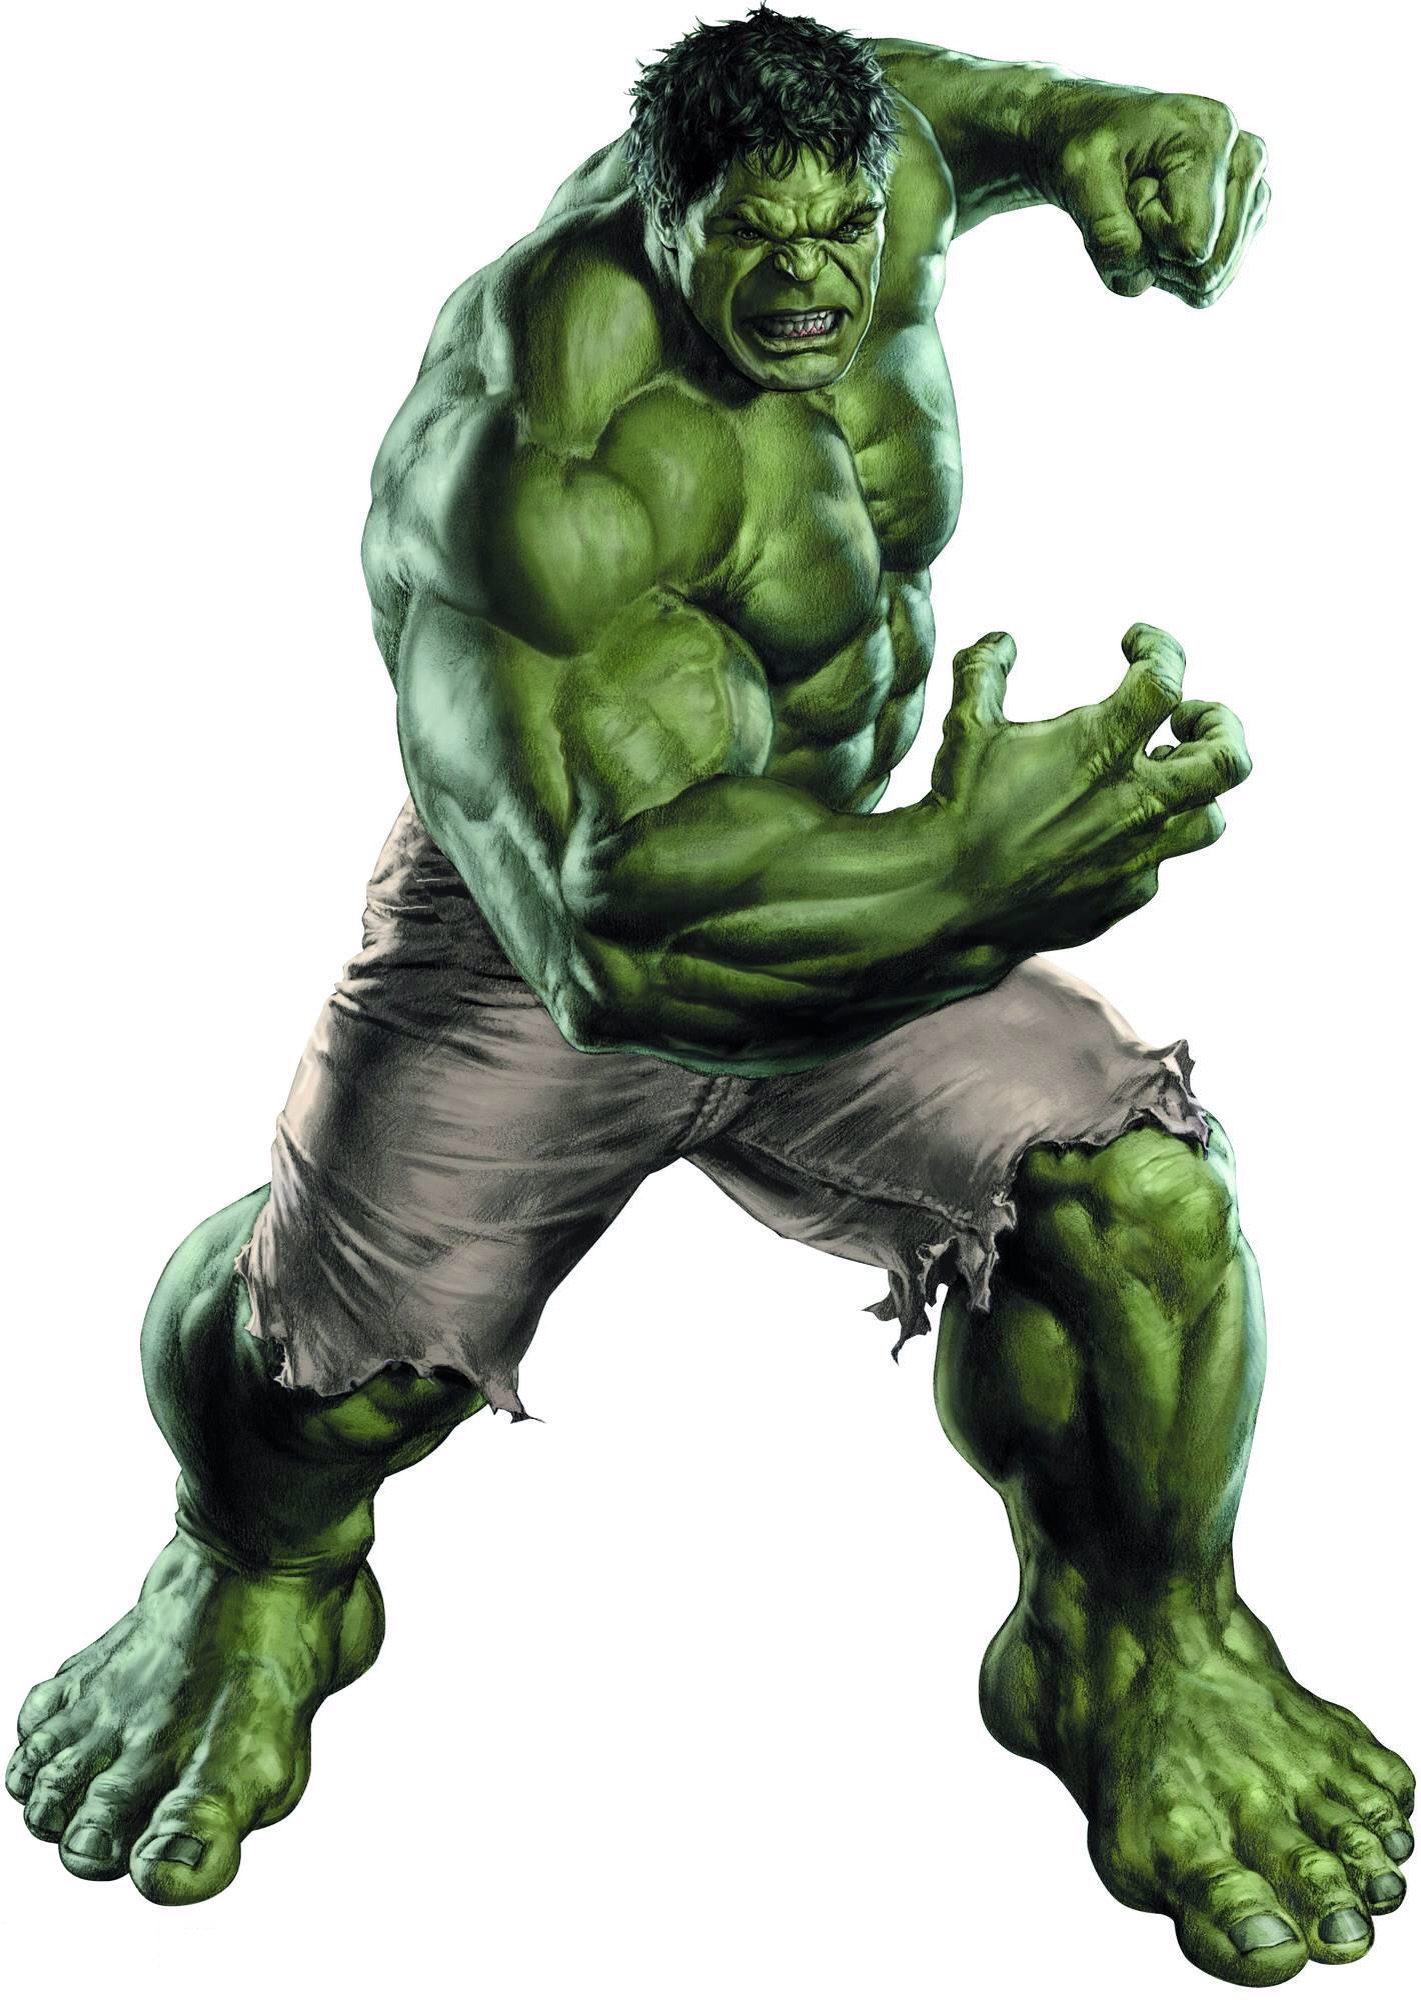 Universal still own solo Hulk rights 